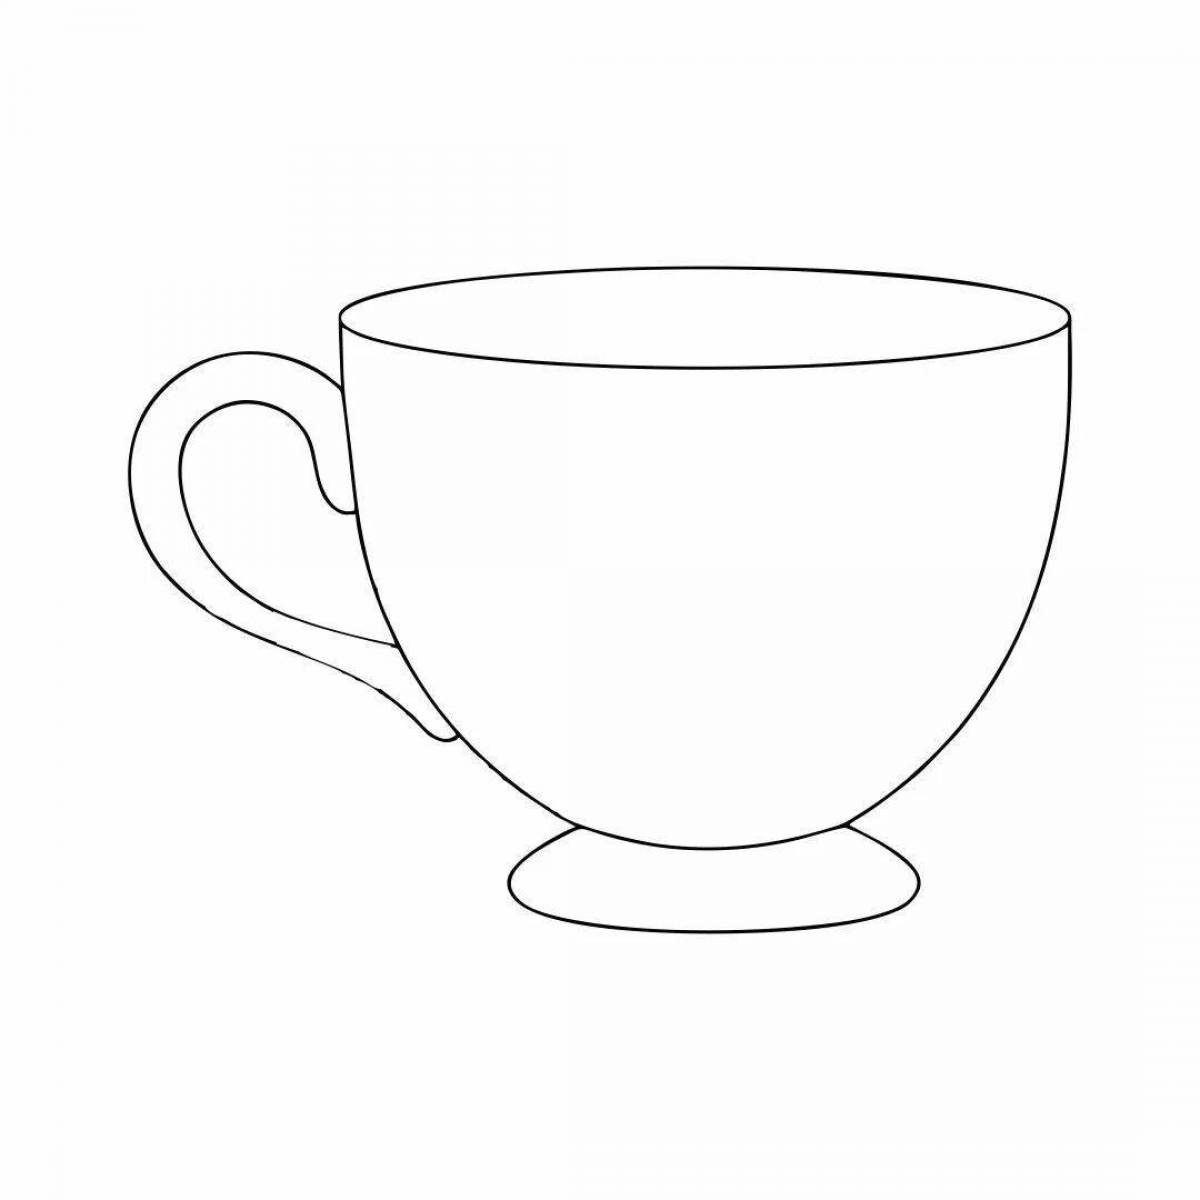 Трафарет чашки для рисования